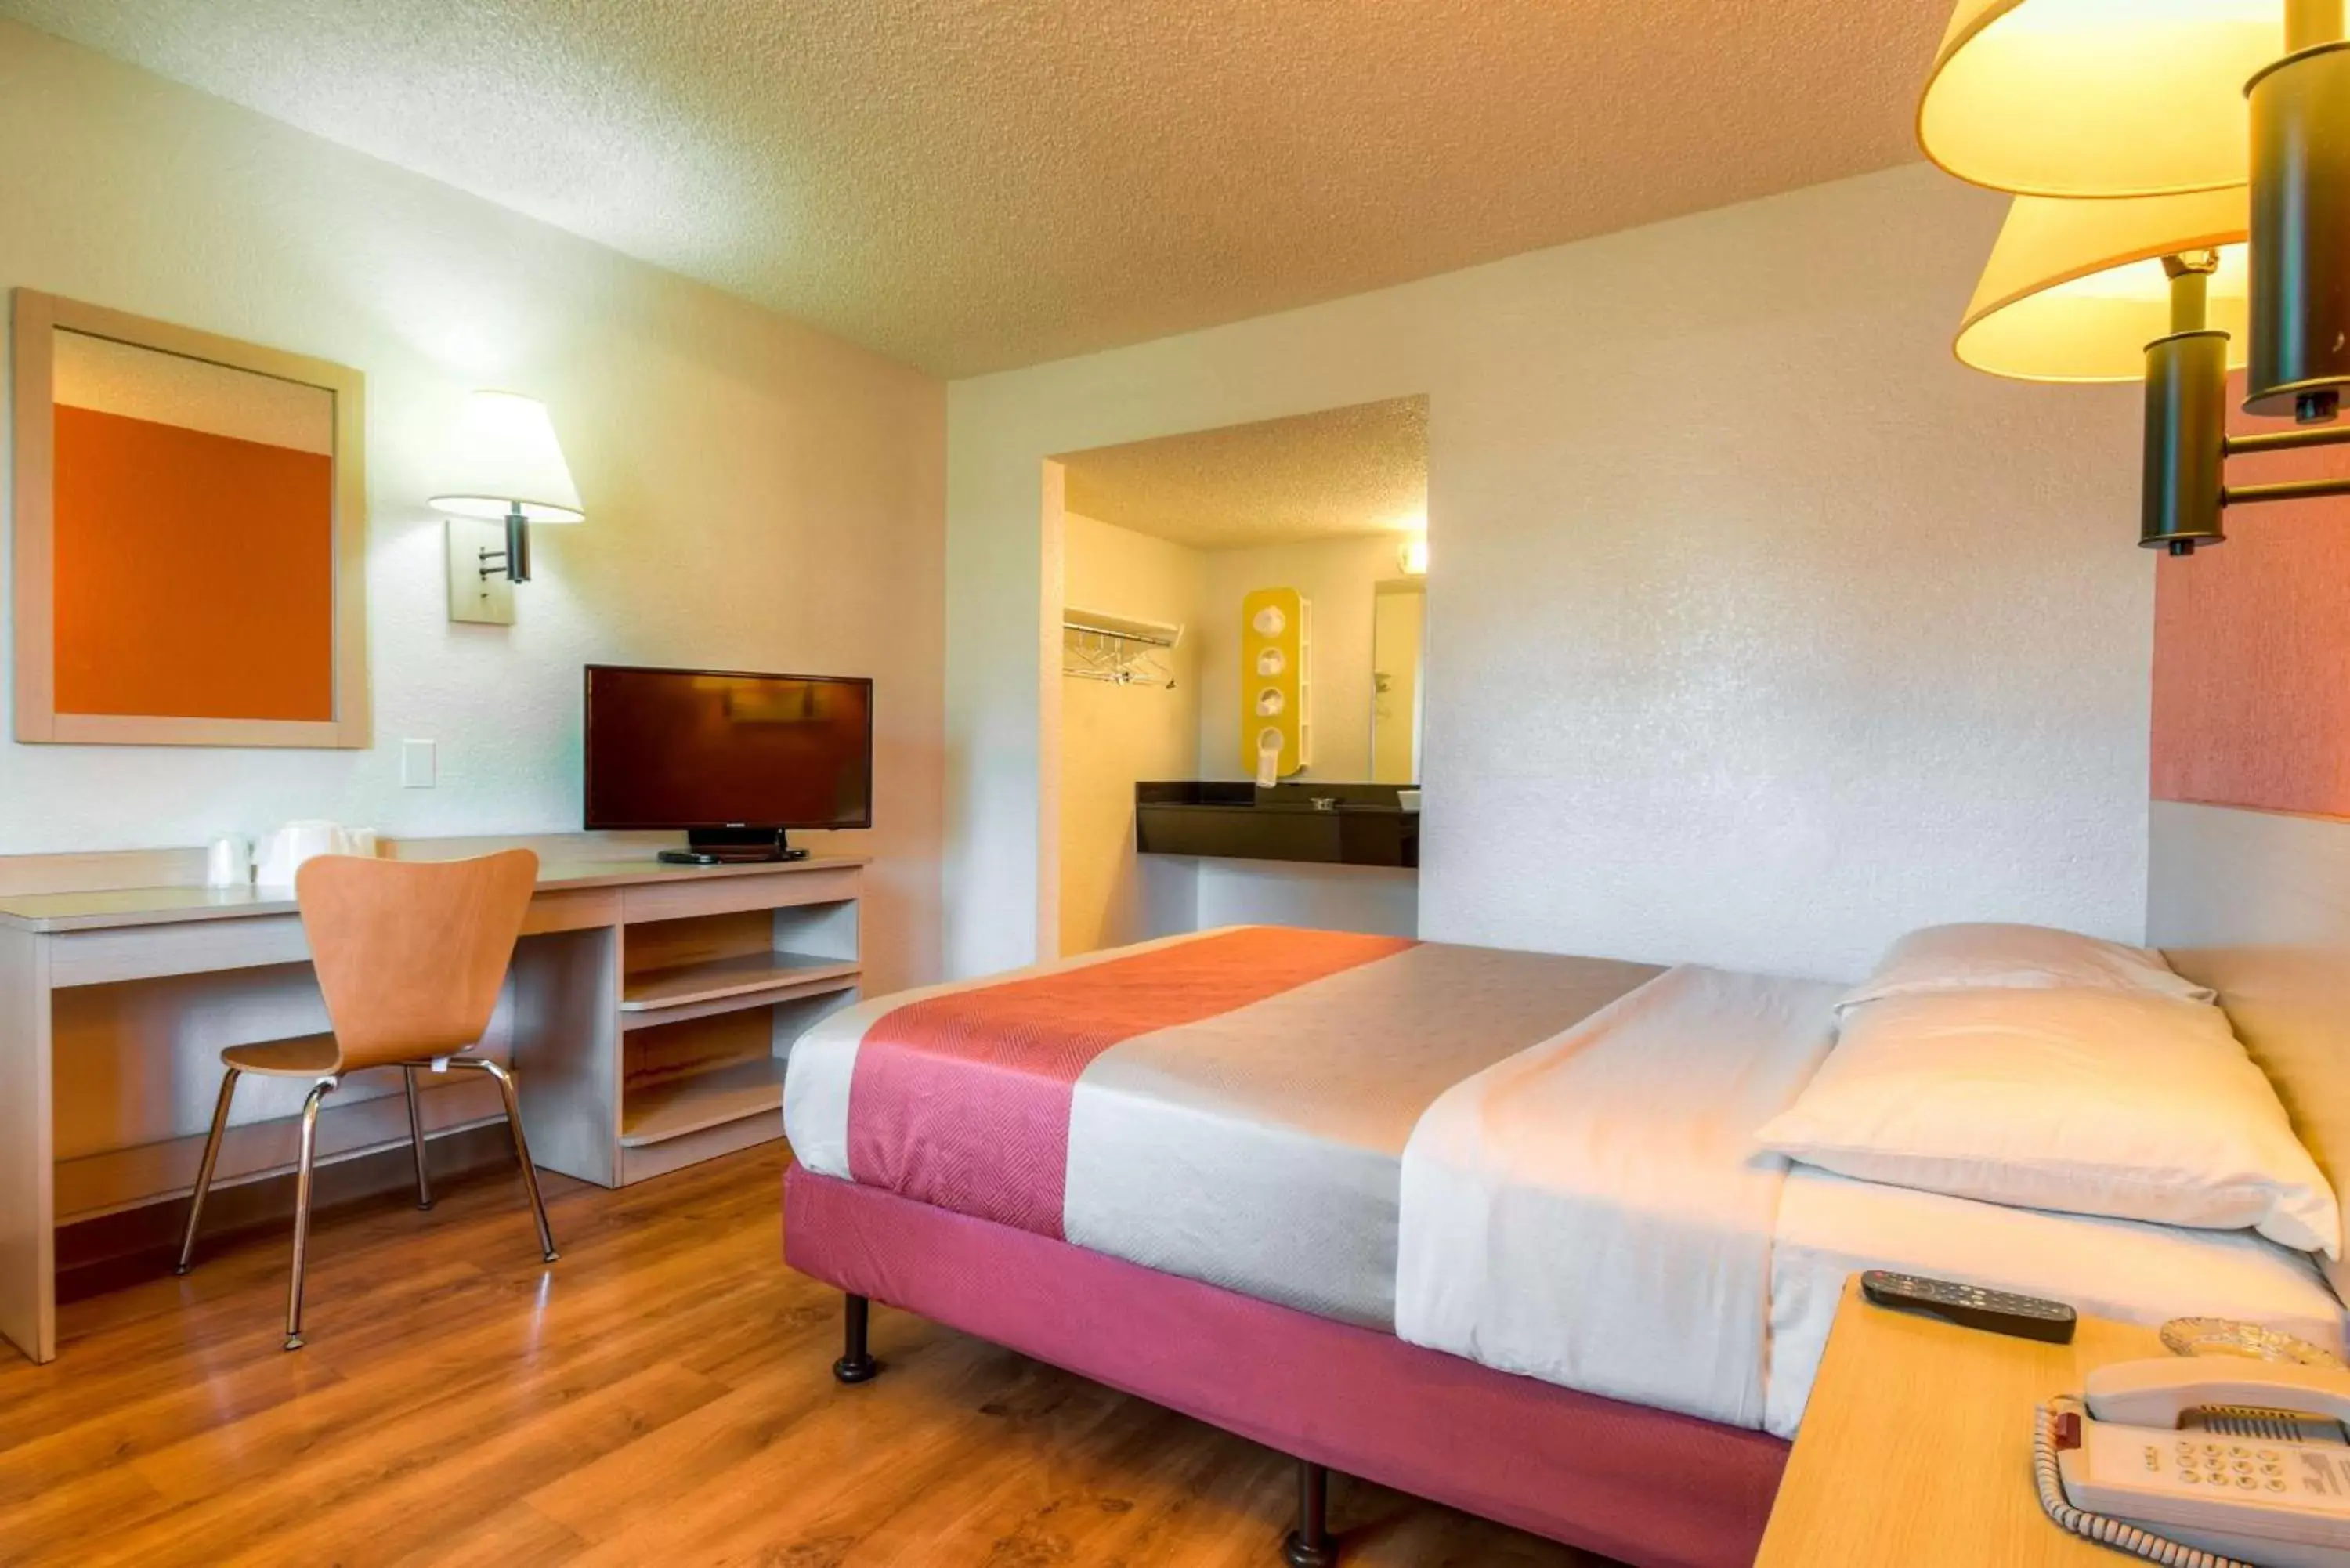 TV and multimedia, Room Photo in Motel 6-Costa Mesa, CA